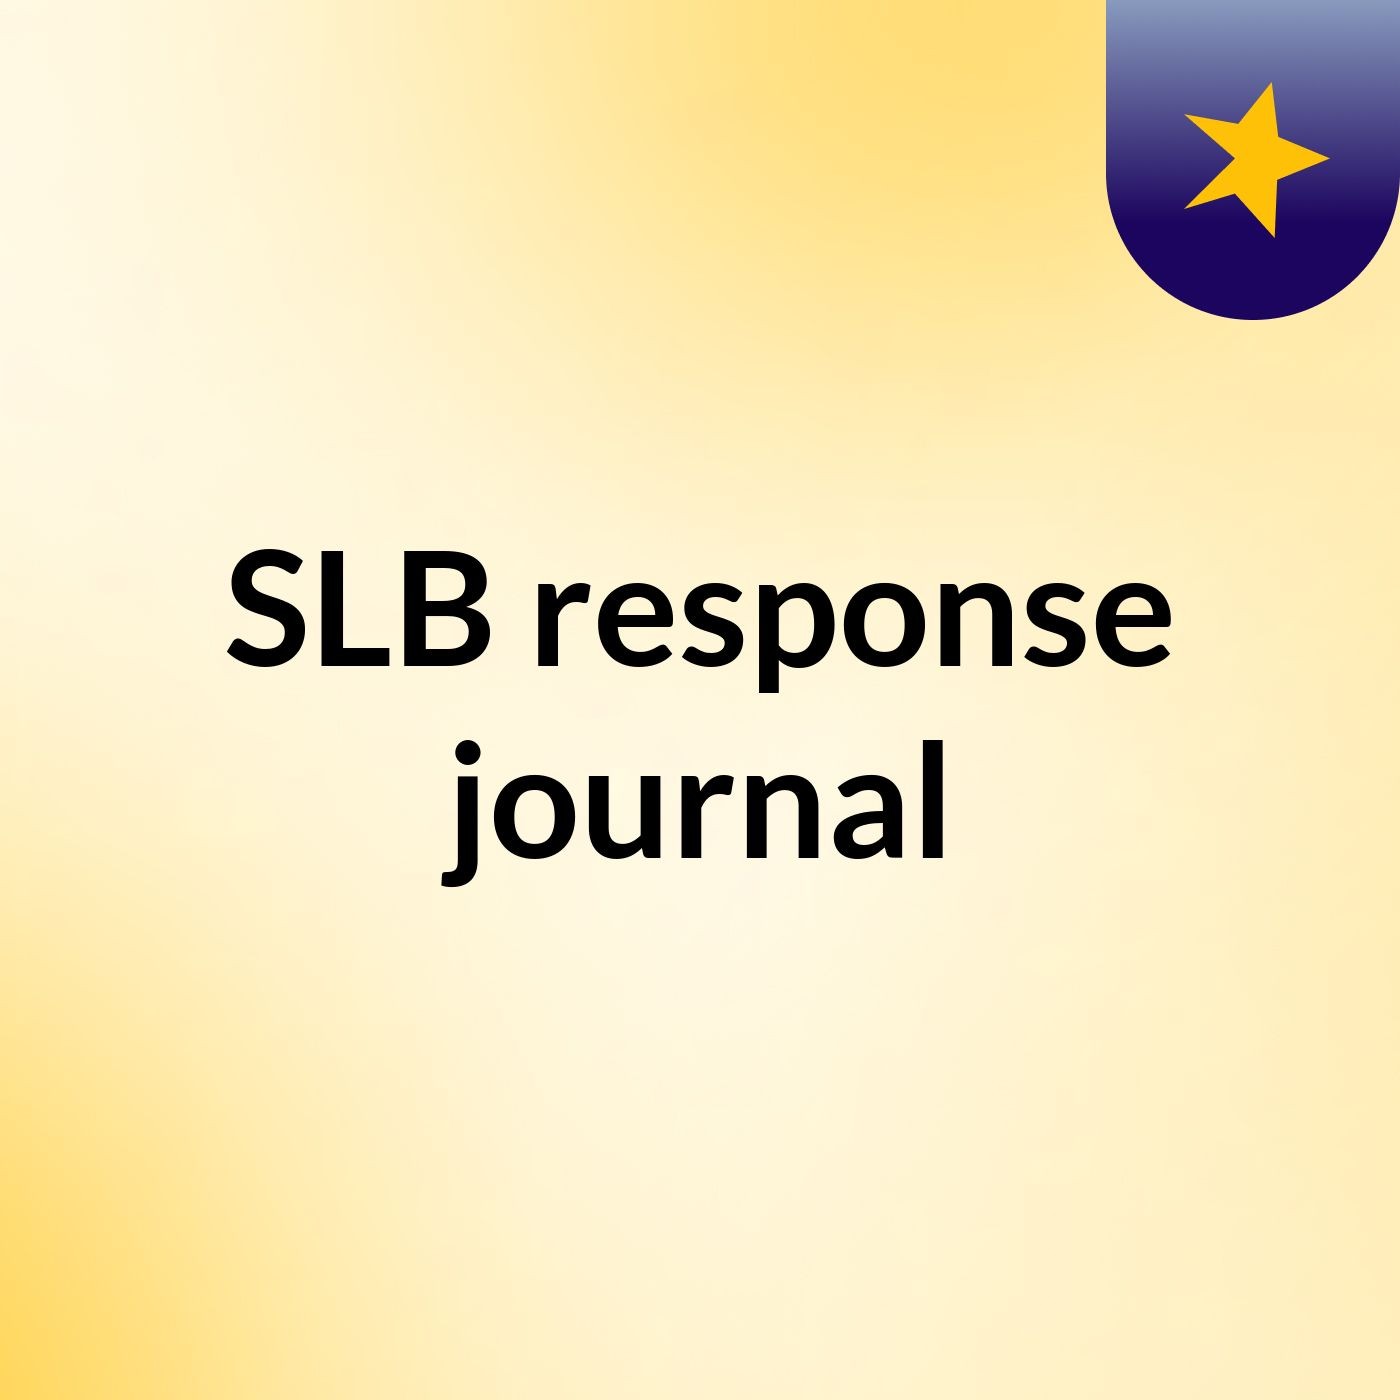 Section 2 - SLB response journal